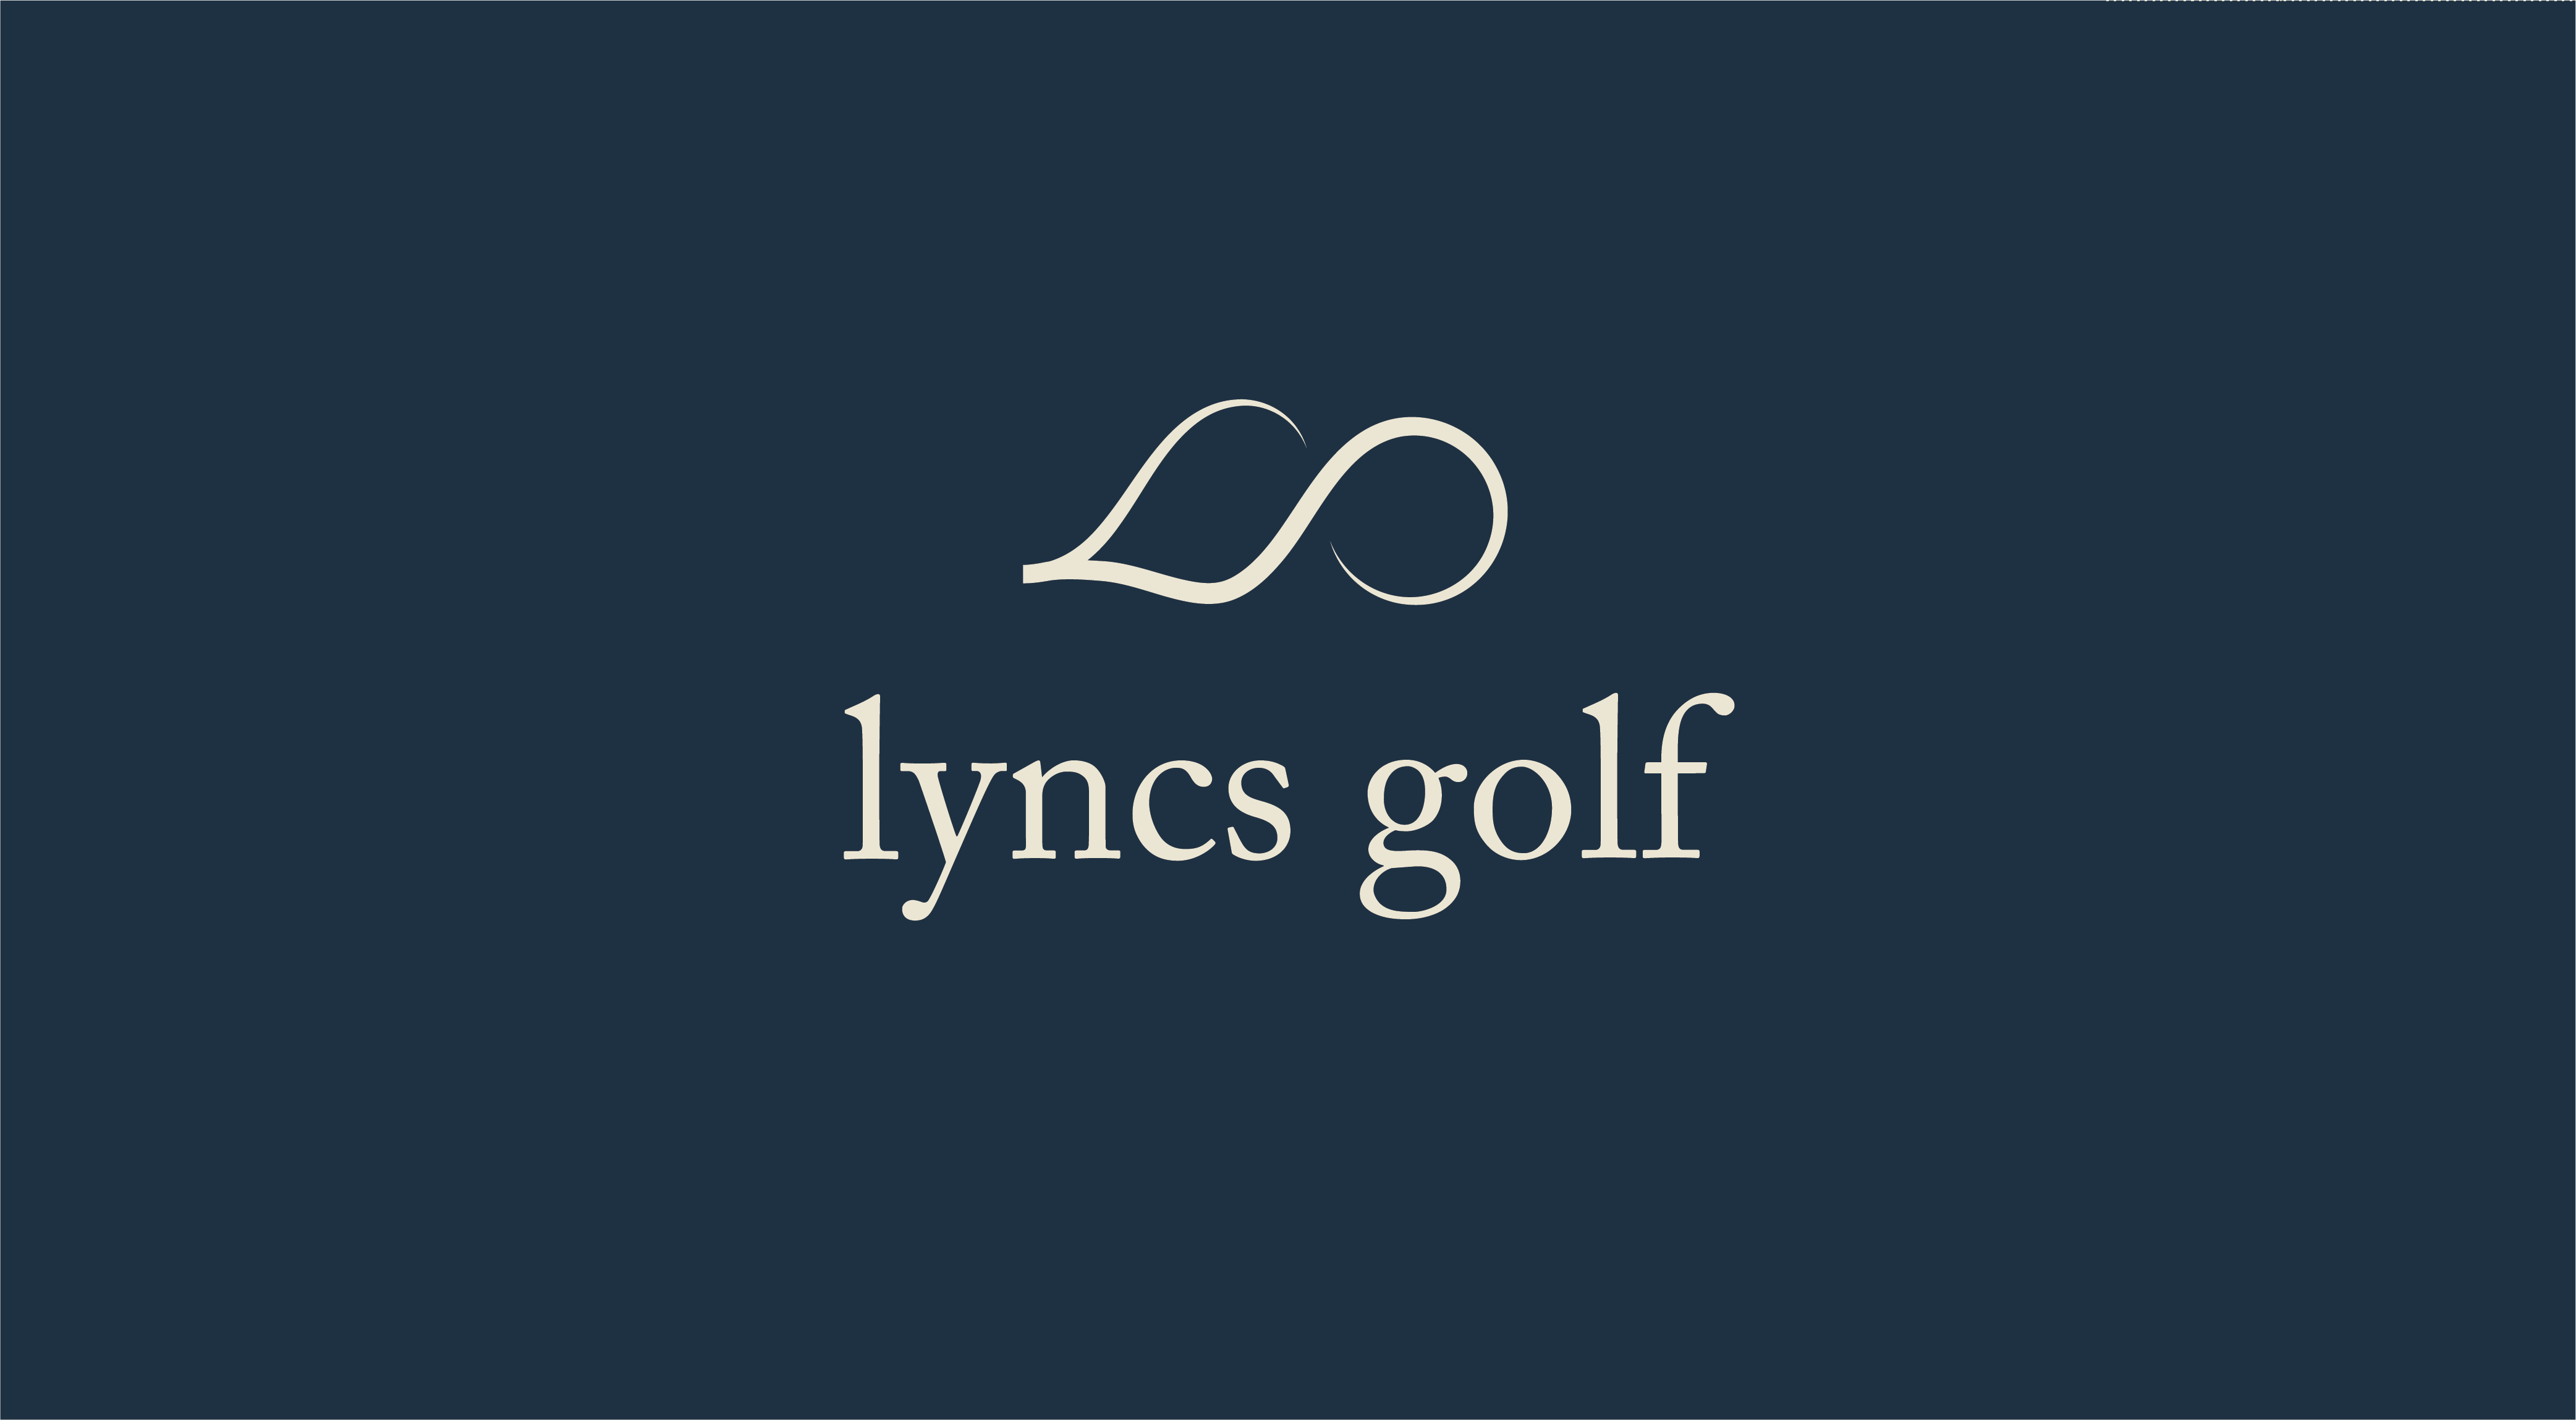 Lyncs golf banner image